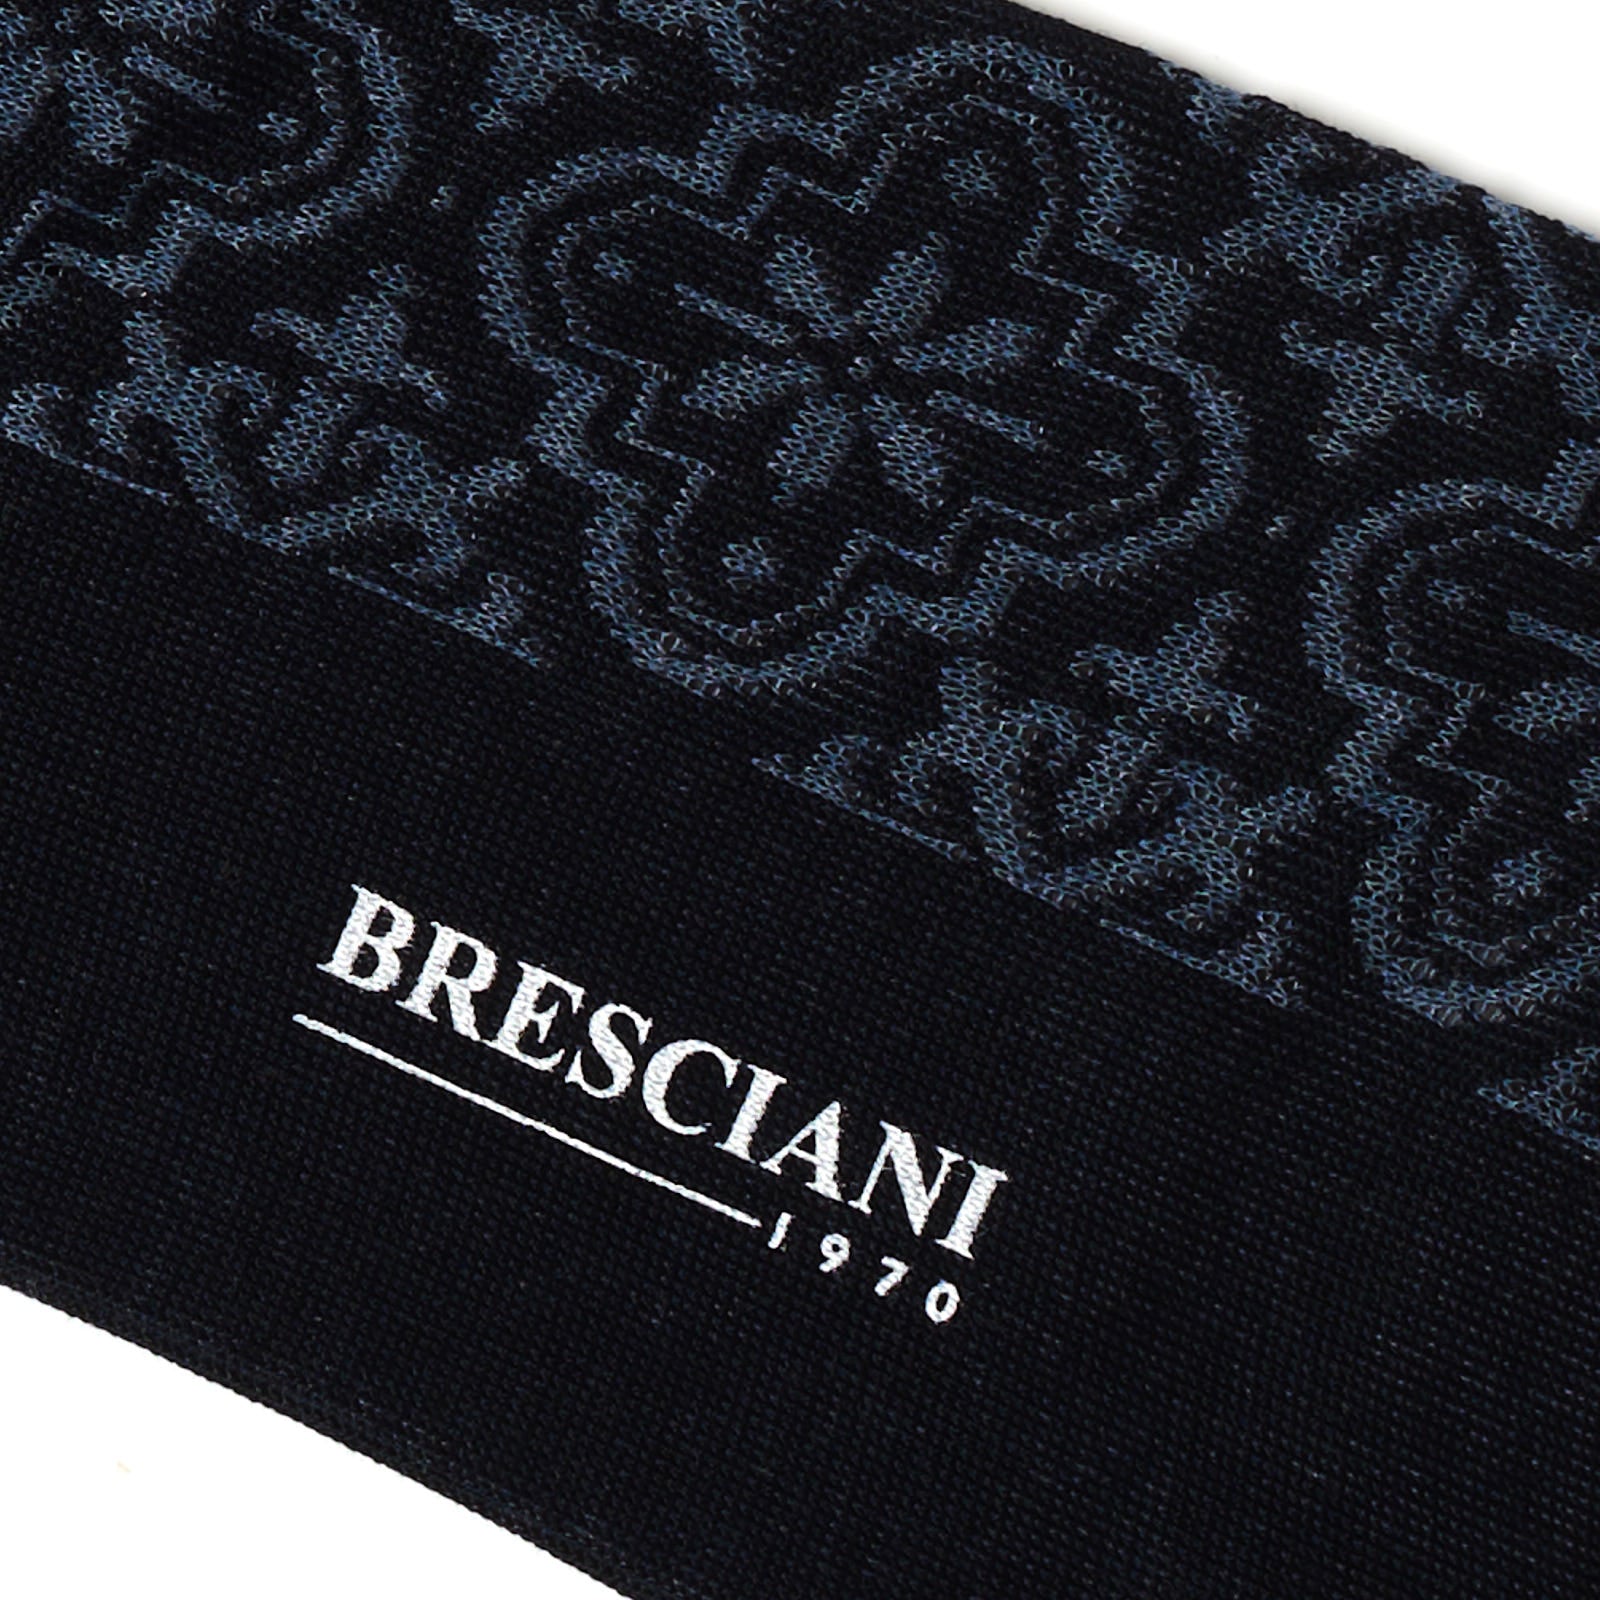 BRESCIANI Cotton Macro-Design Mid Calf Length Socks US M-L